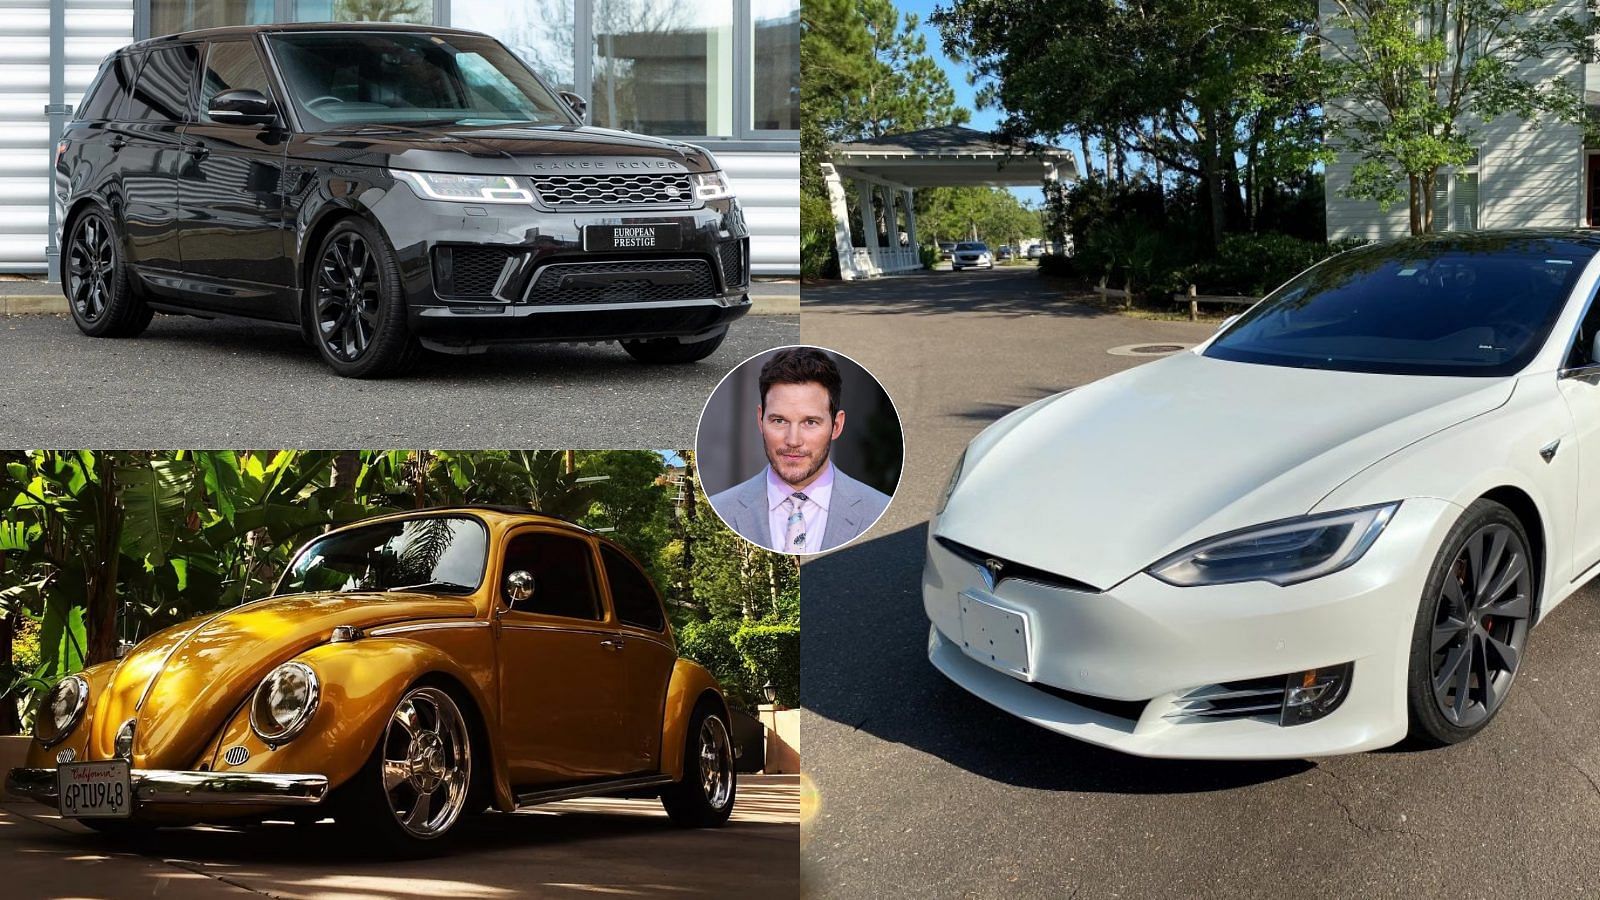 The Chris Pratt Car Collection Has Humble Cars Like VW Beetle